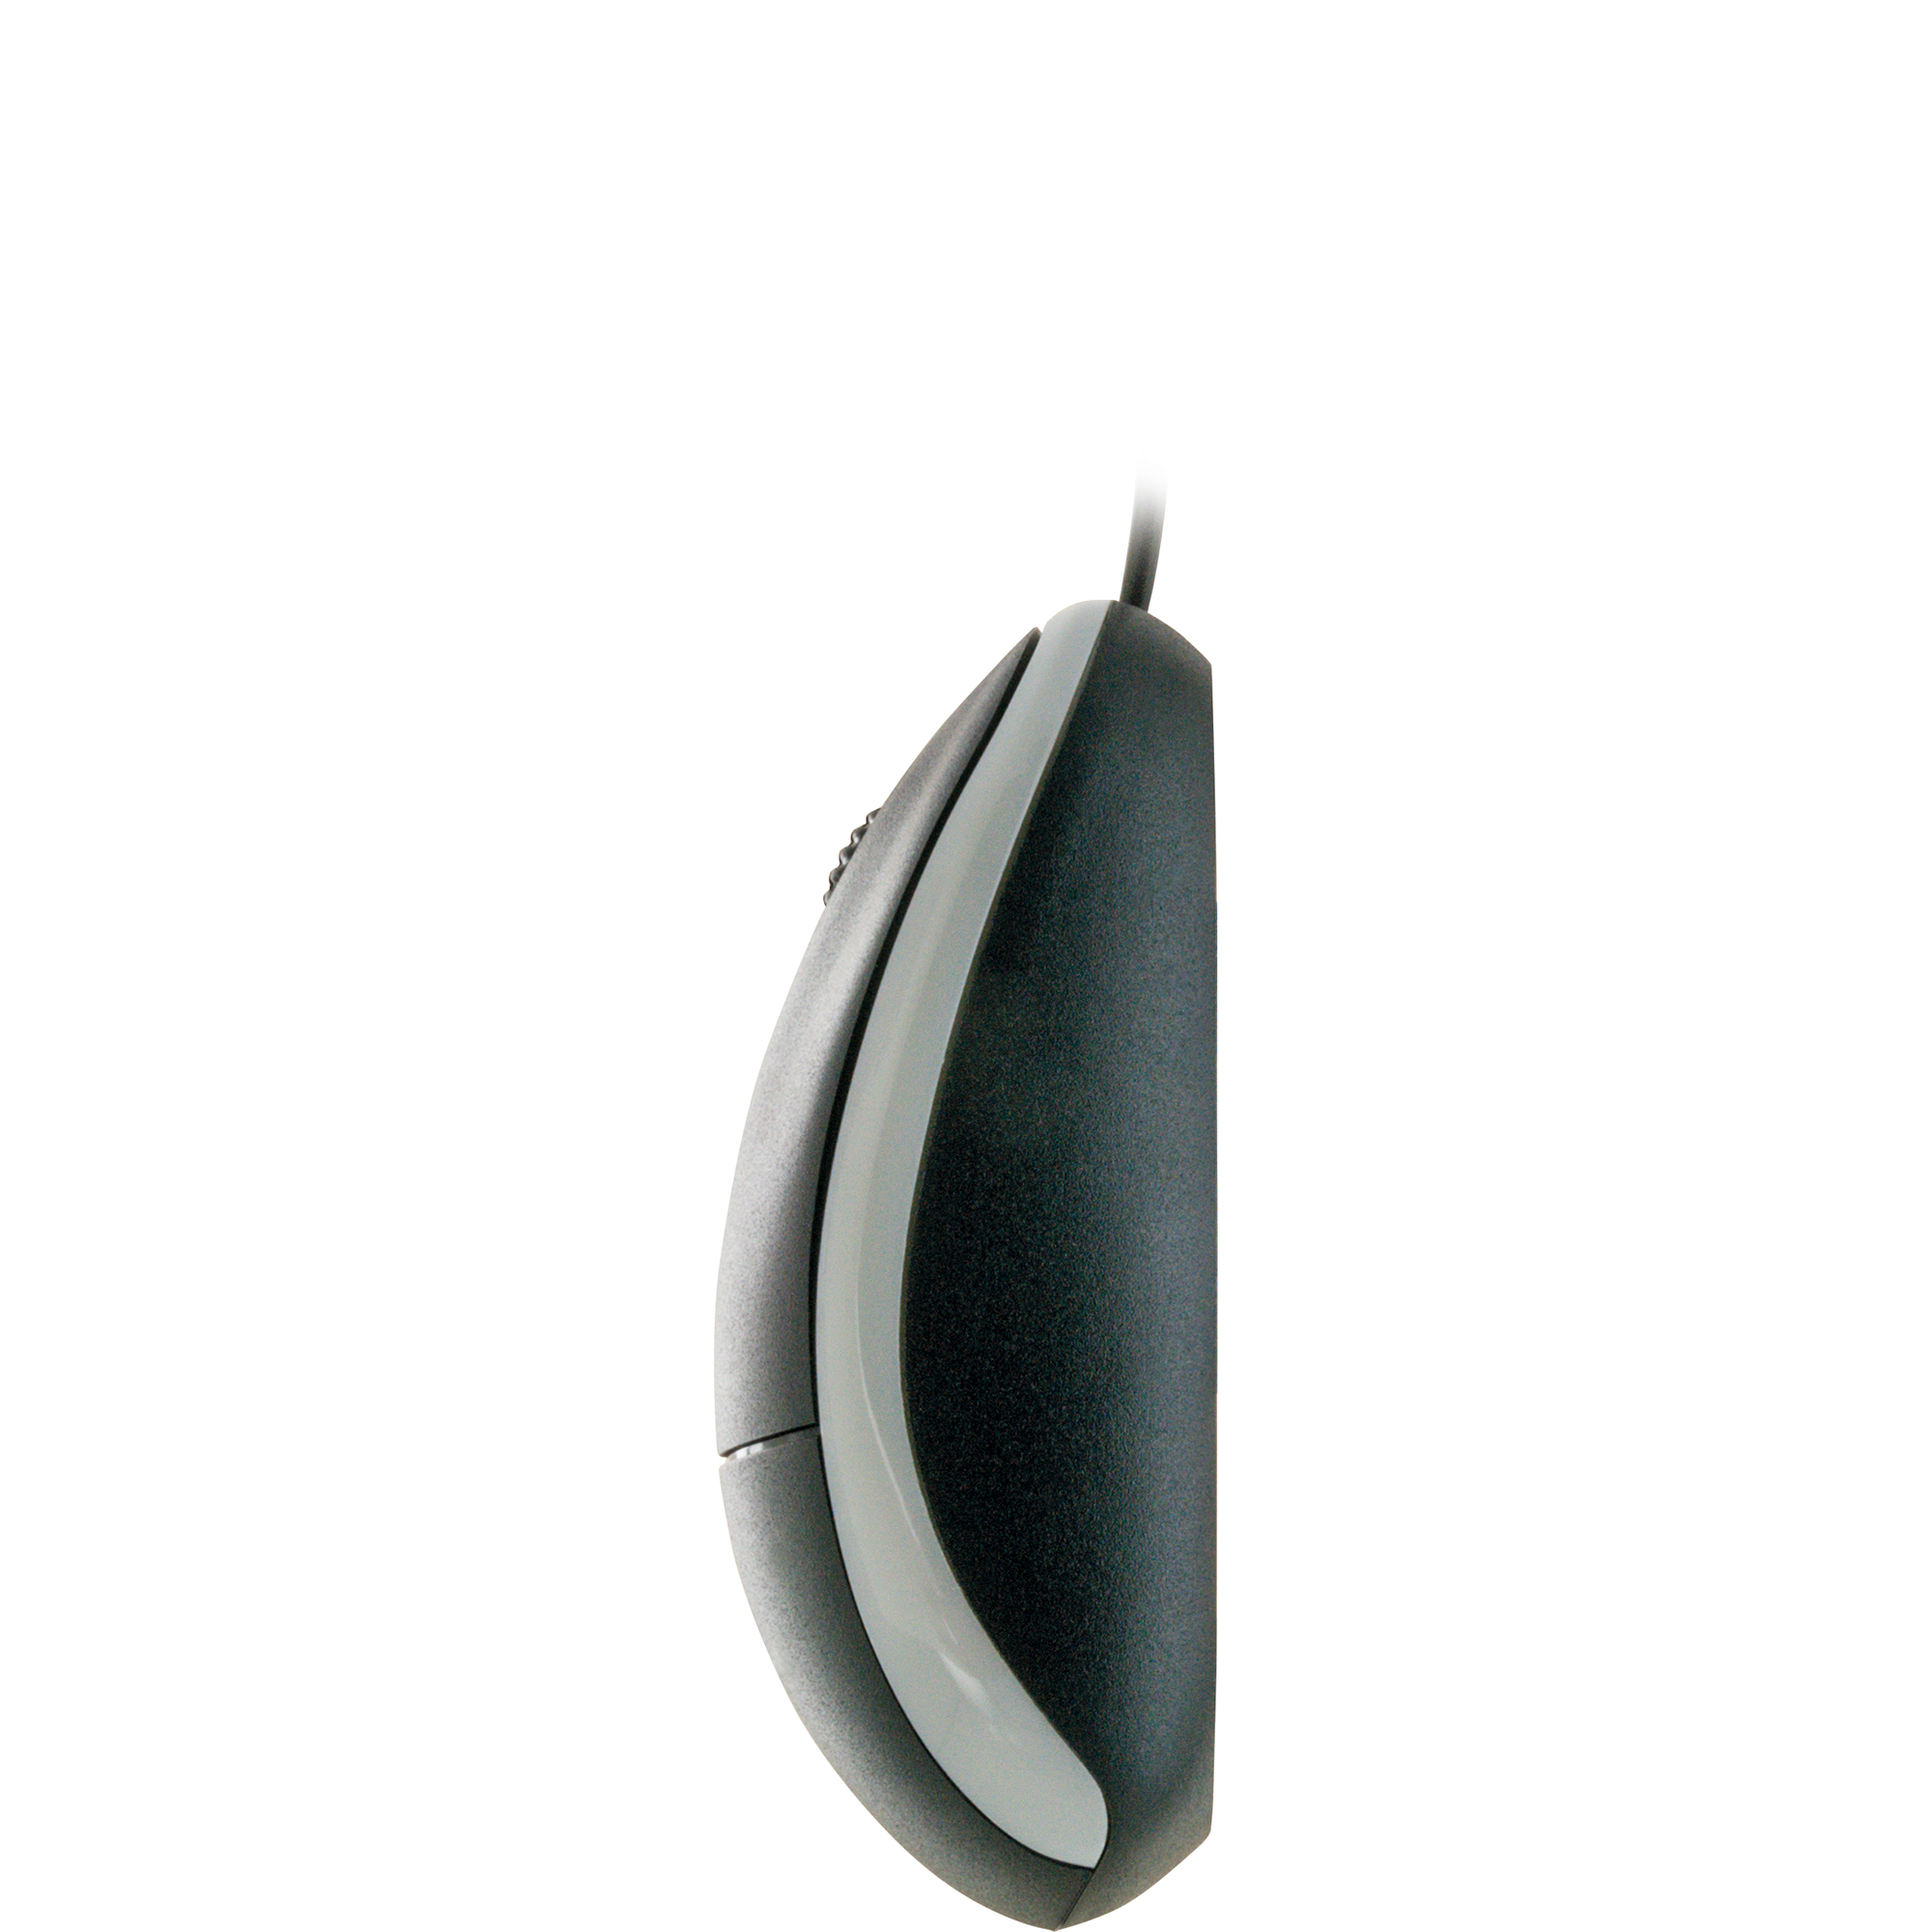 PC-Maus kabelgebunden schwarz rechts/linkshändig + product picture